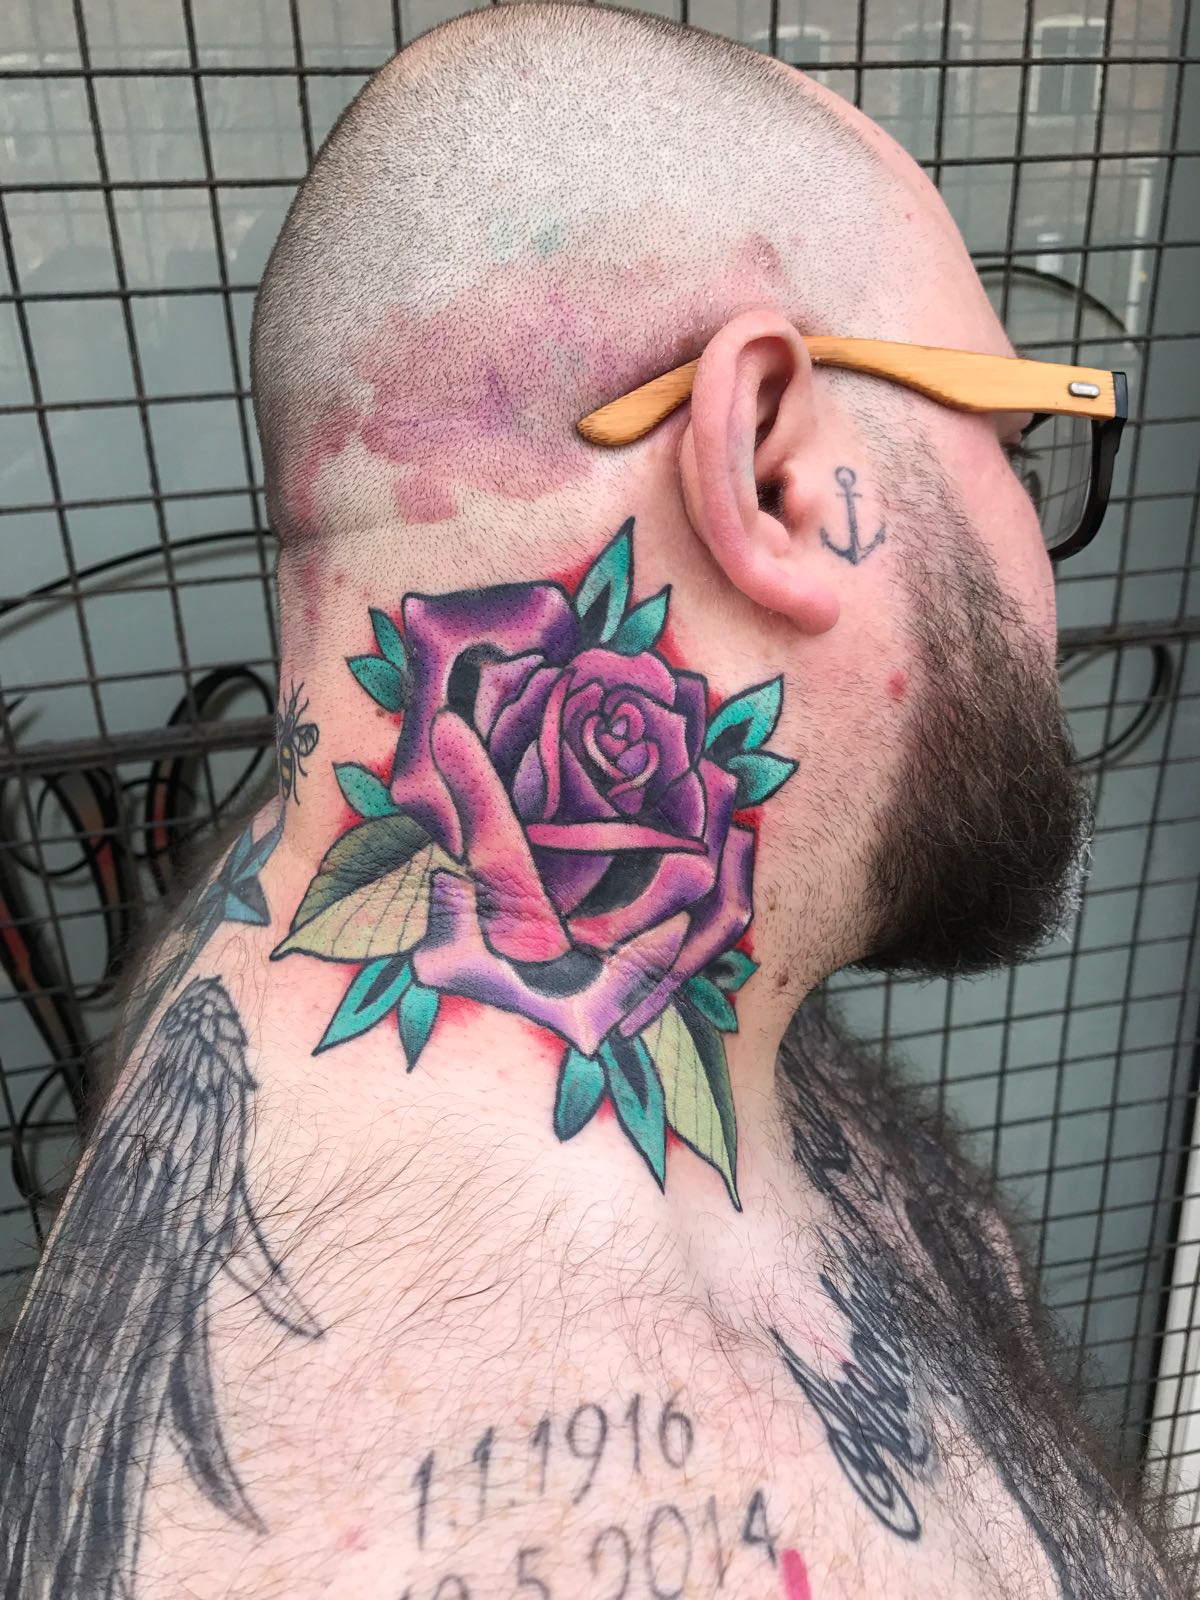 Carpe Diem Tattoo on Twitter Our JC had his neck rose this week  CarpeDiemJC WorldFamousInk fkirons EternalInk TattooArtistMag  egomachines Bold Purple rosesTattoo neotraditional tattoo  httpstcoge8VCjP2aq  Twitter